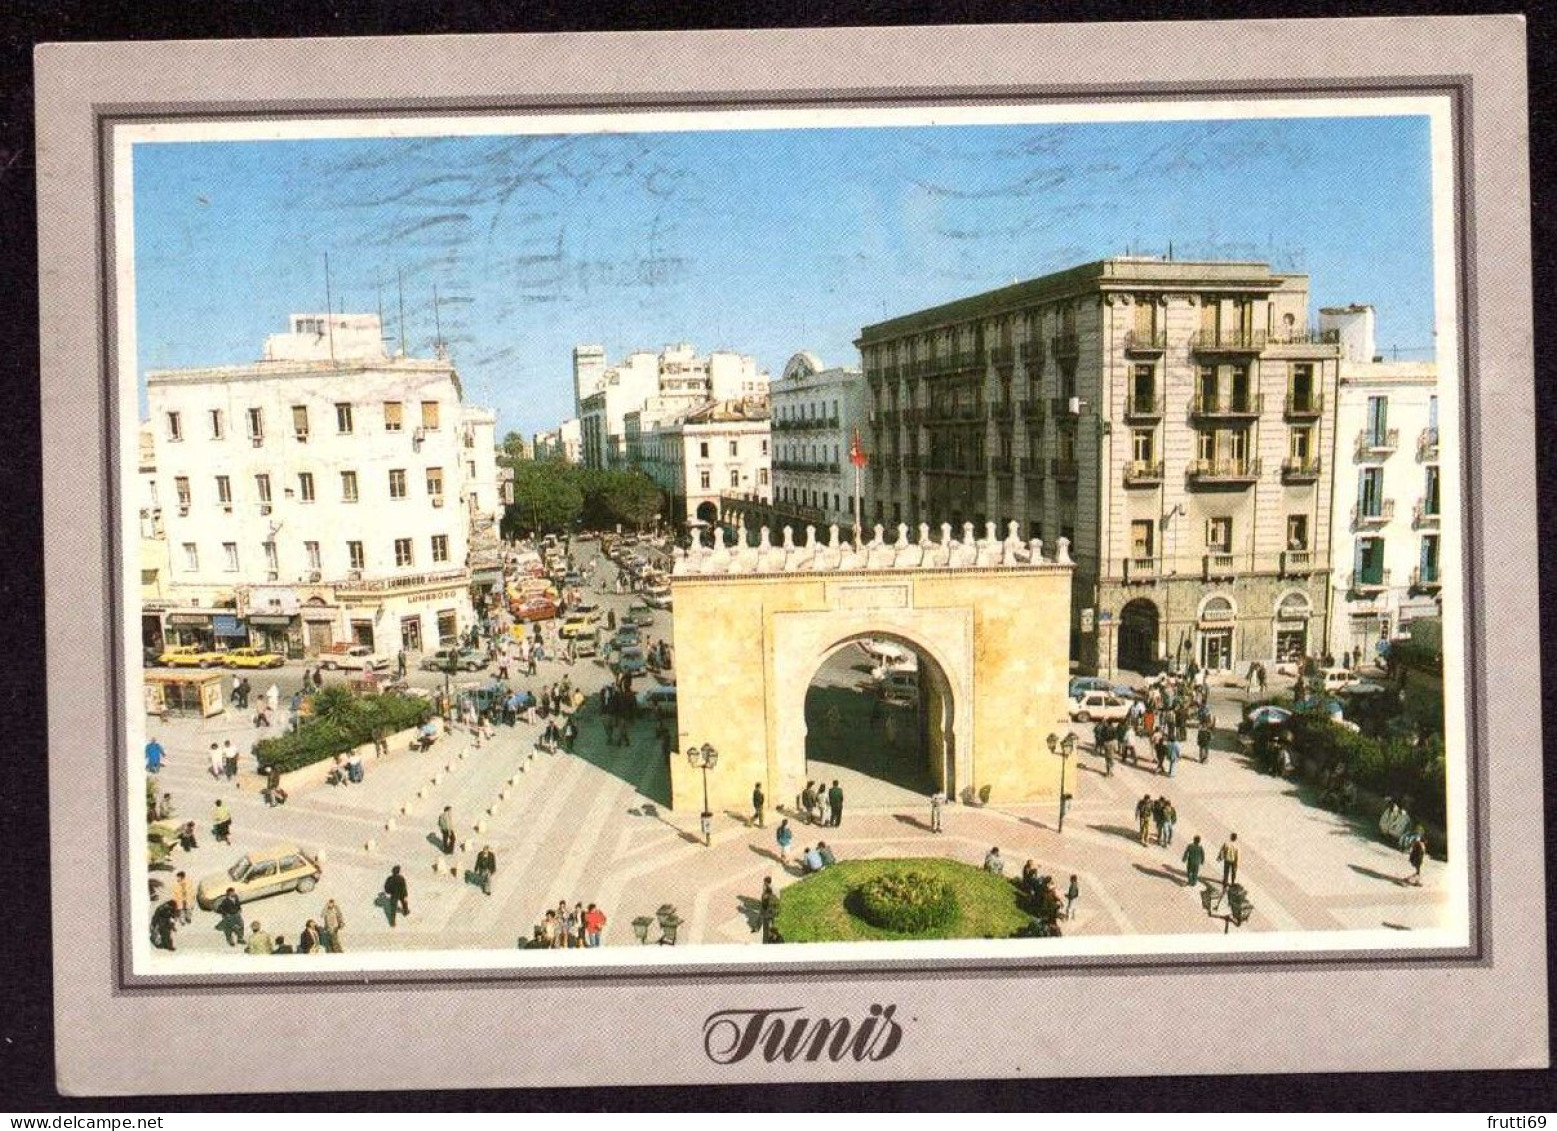 AK 211926 TUNISIA - Tunis - La Porte De France - Tunisie